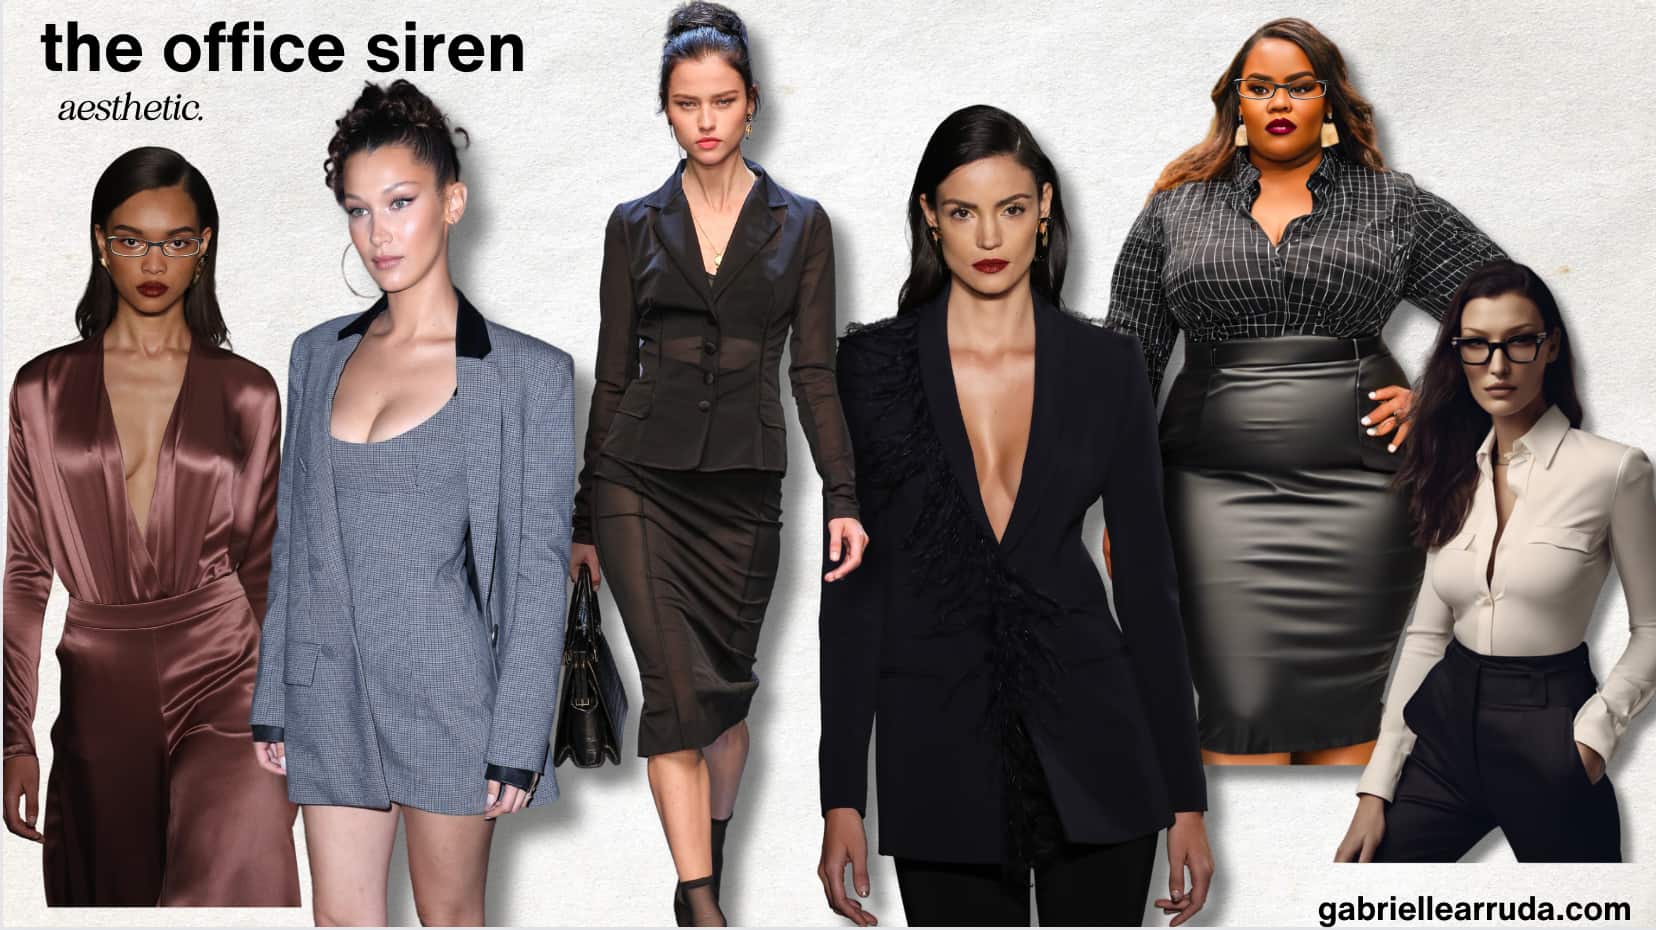 Office Siren Aesthetic. Here's how a stylist would merge CEO + Femme Fatale  - Gabrielle Arruda